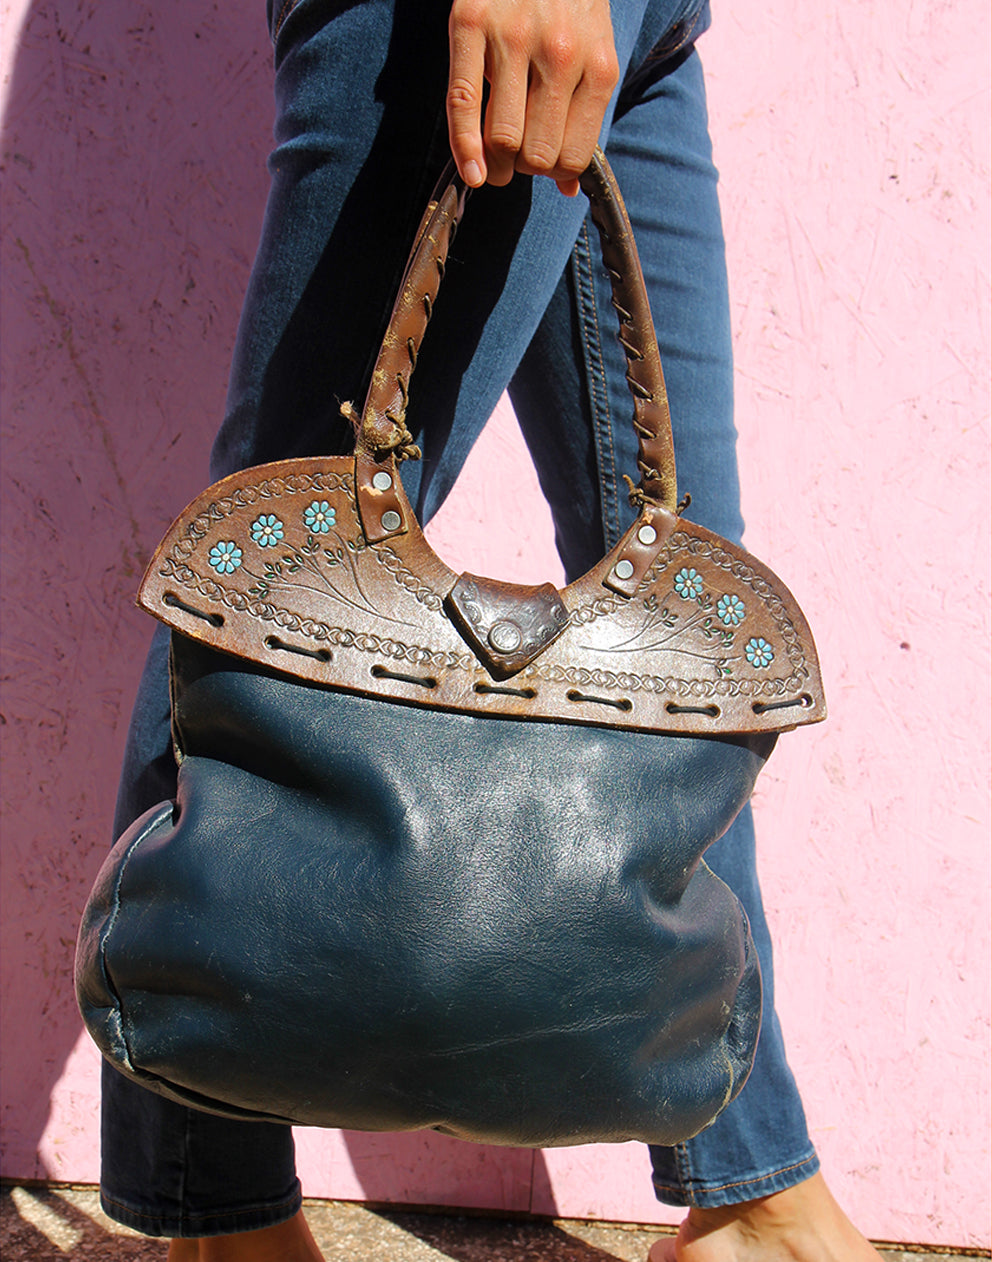 Leather Handbag in Tan & Blue